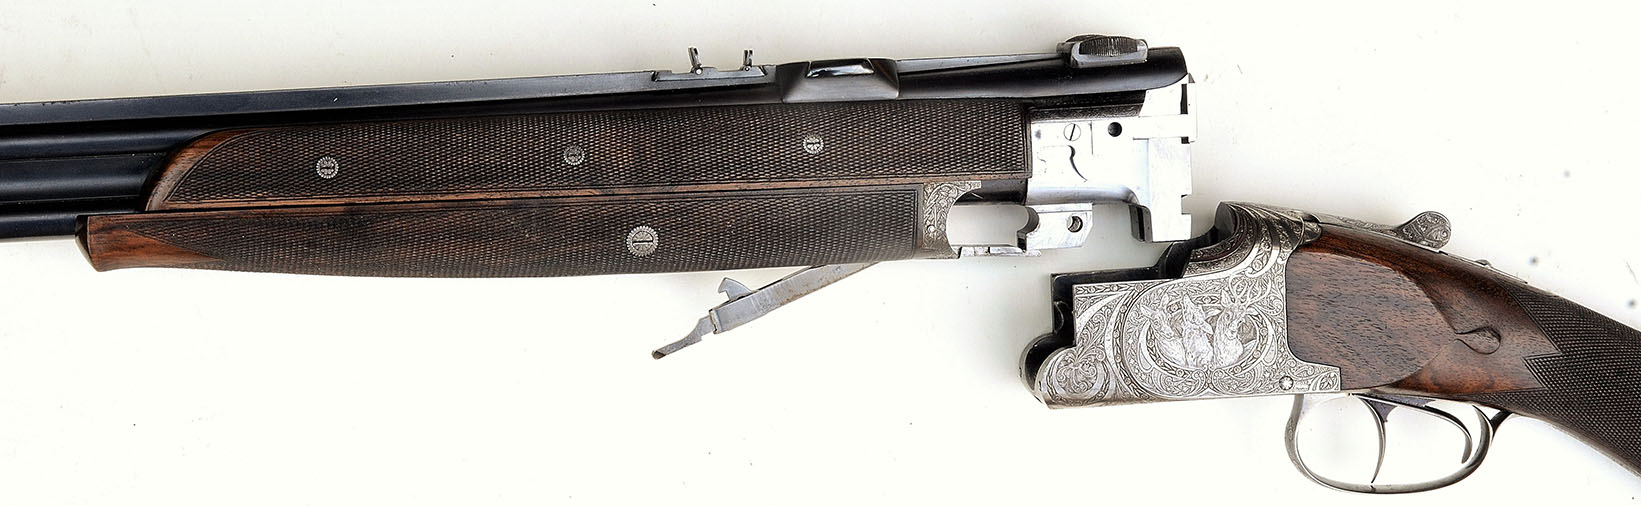 FN B25 Express rifle with Funken engraving© Fredrik Franzen